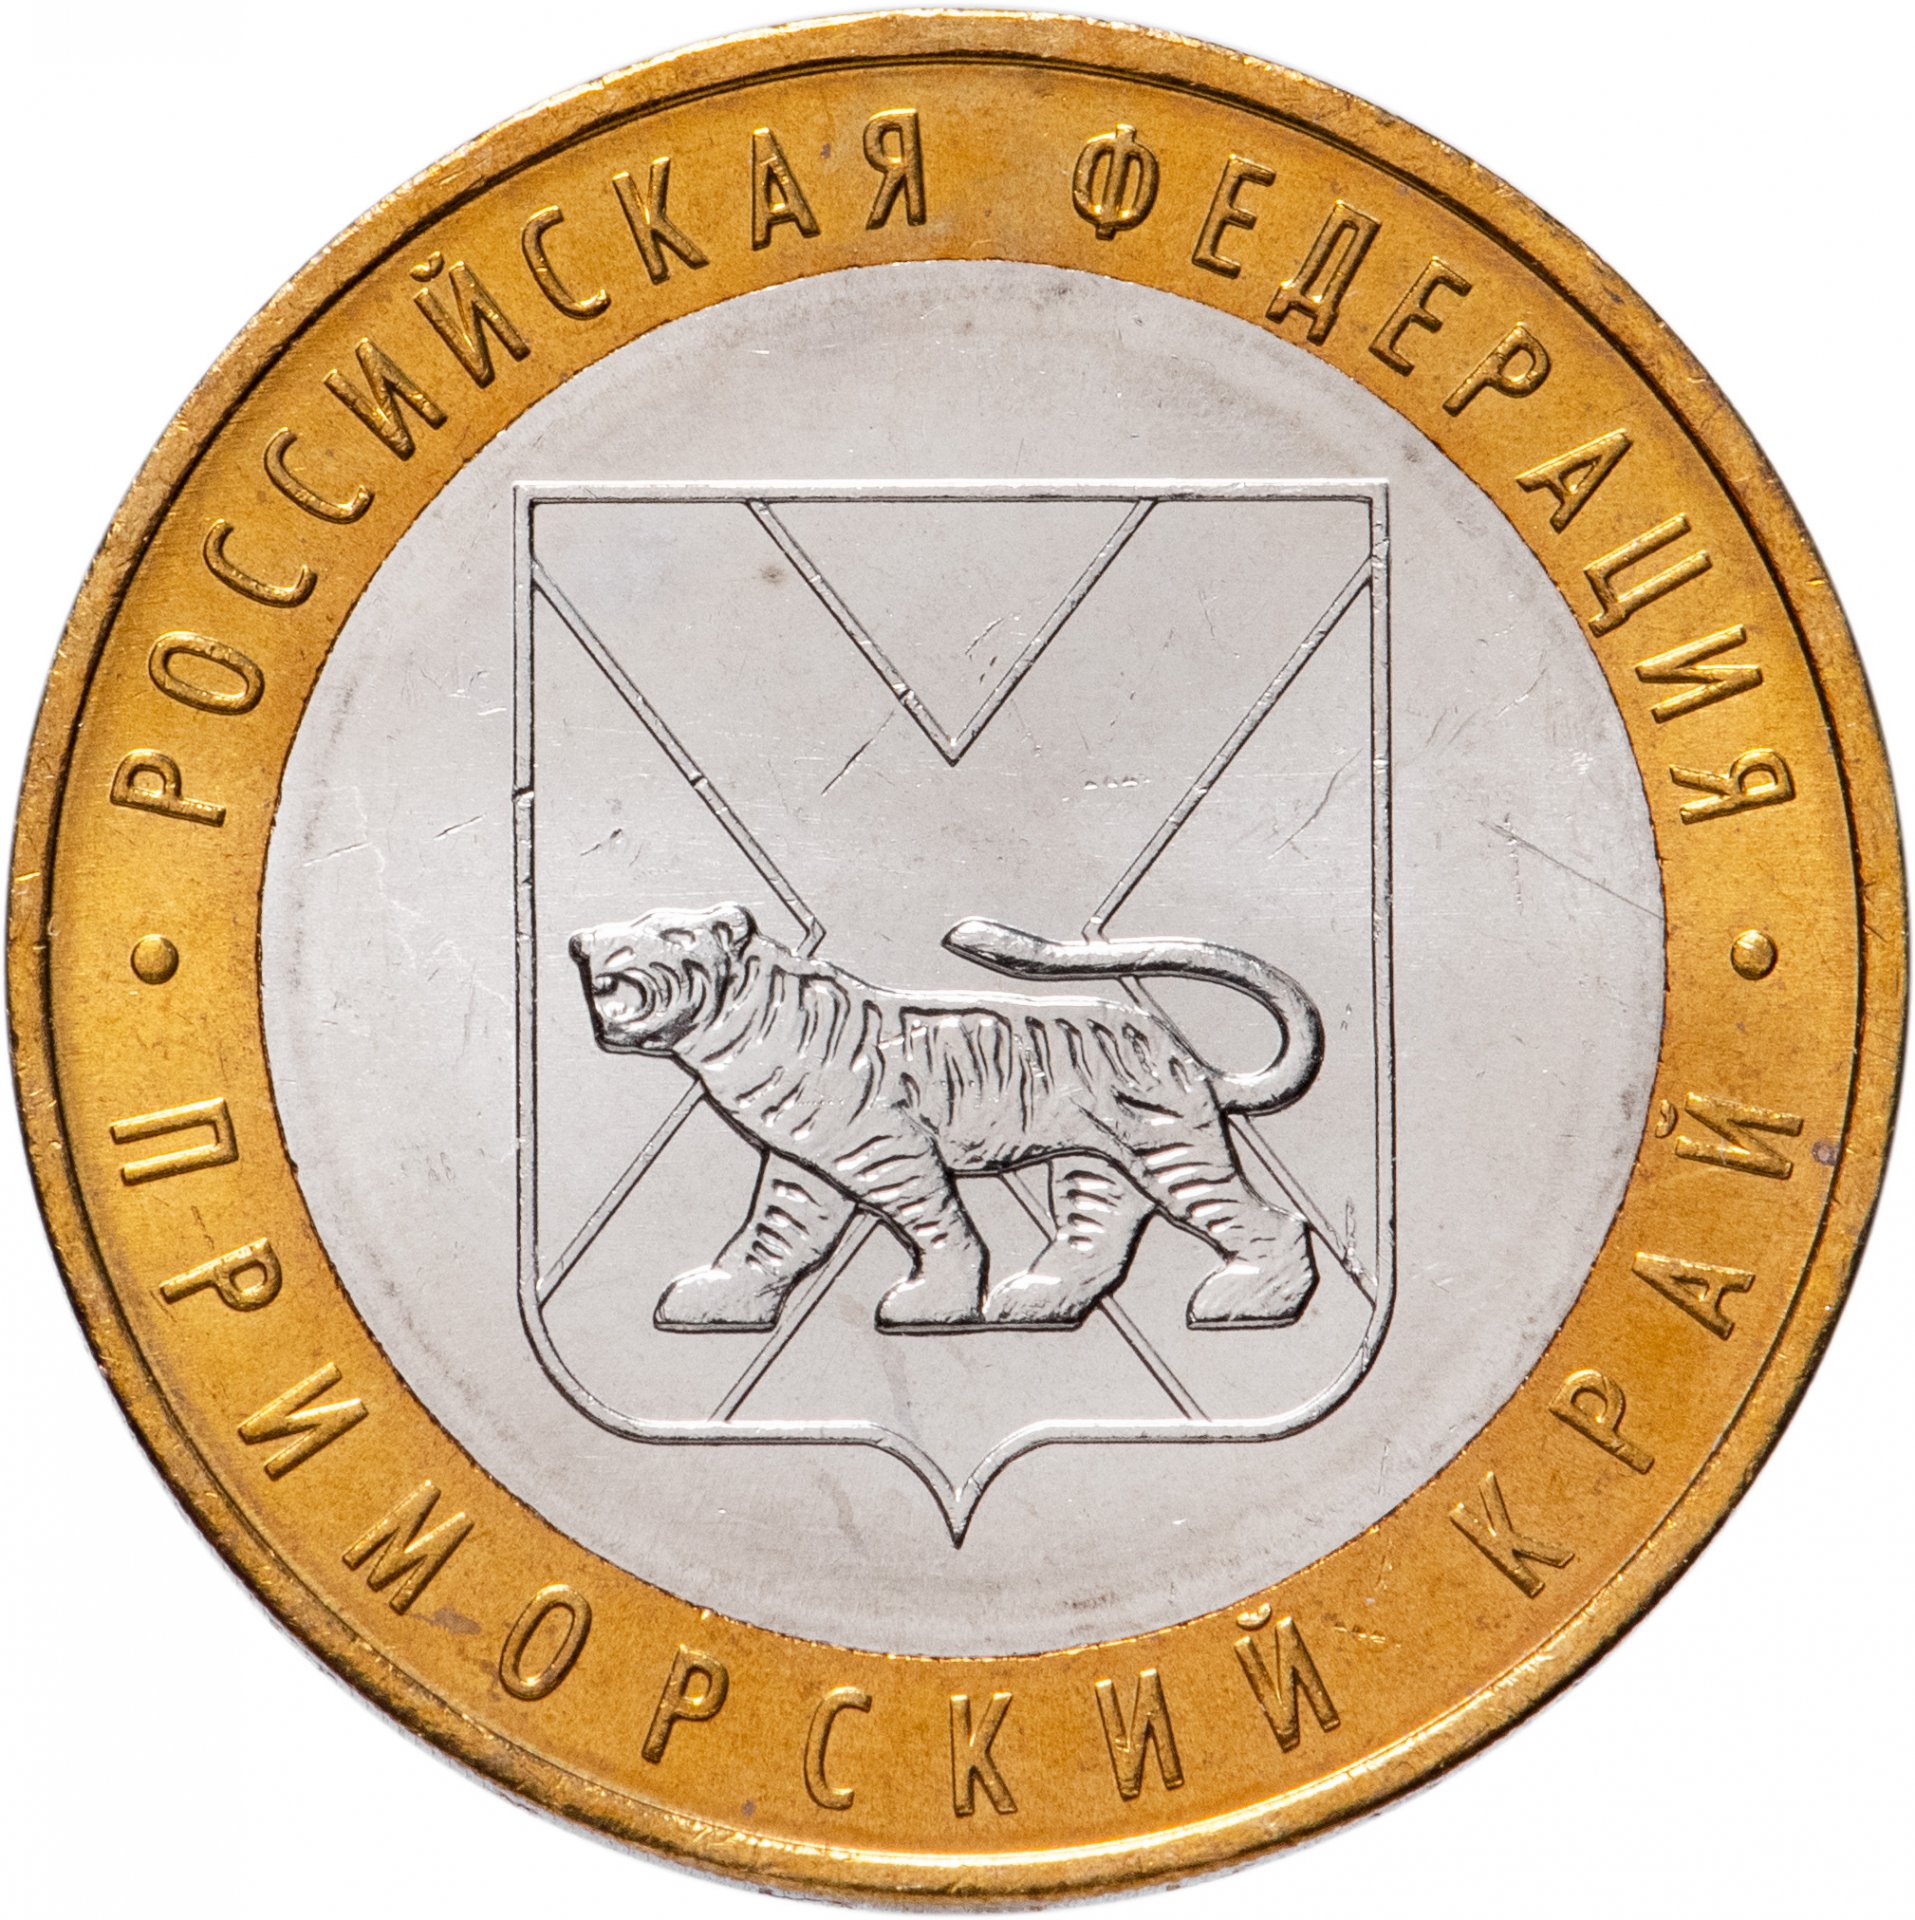 10 рублей 2006 года, буквы ММД "Приморский край"